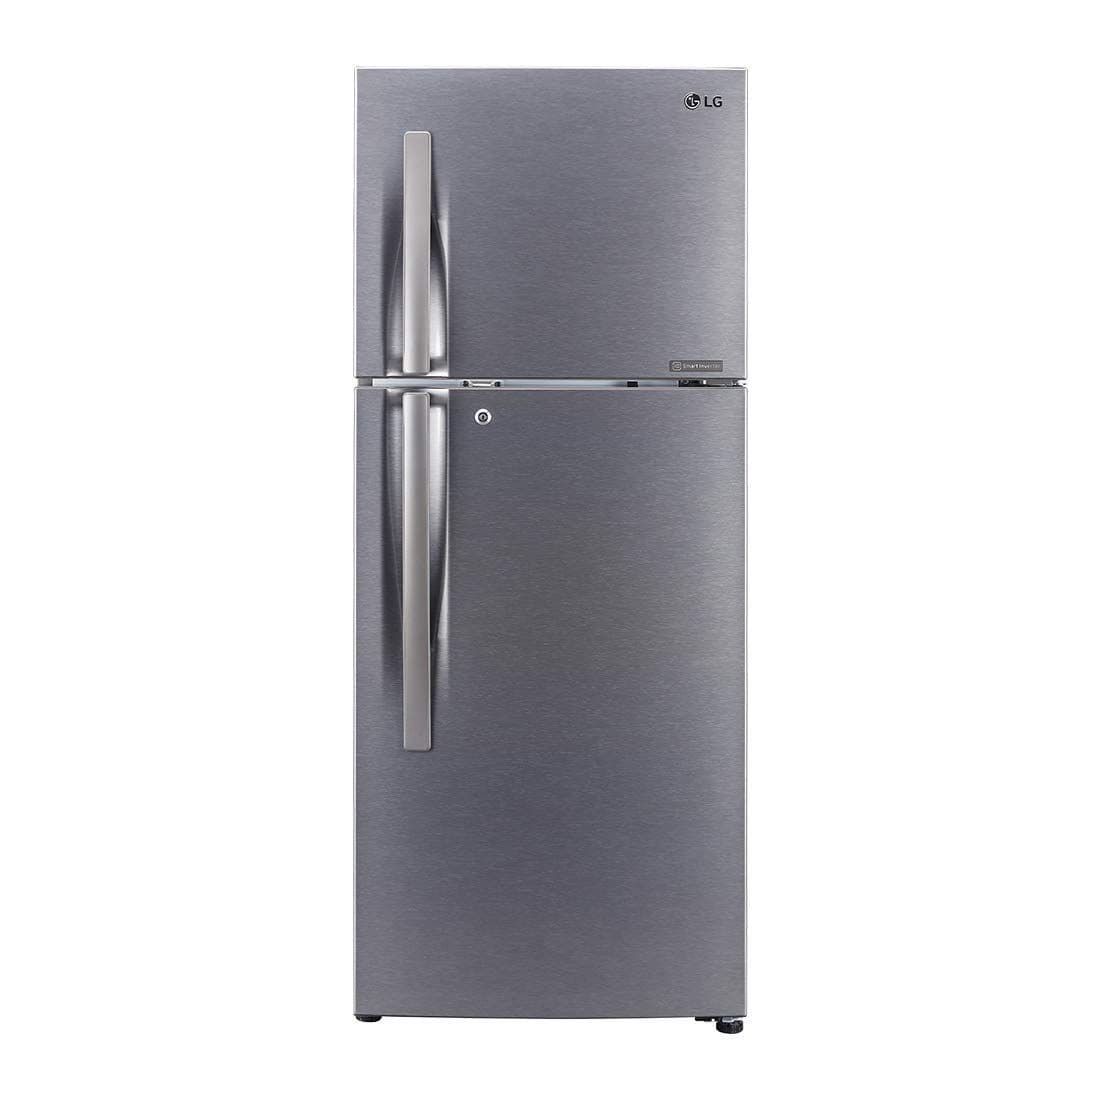 LG GL-N292RDSY 260 Ltr Double Door Refrigerator